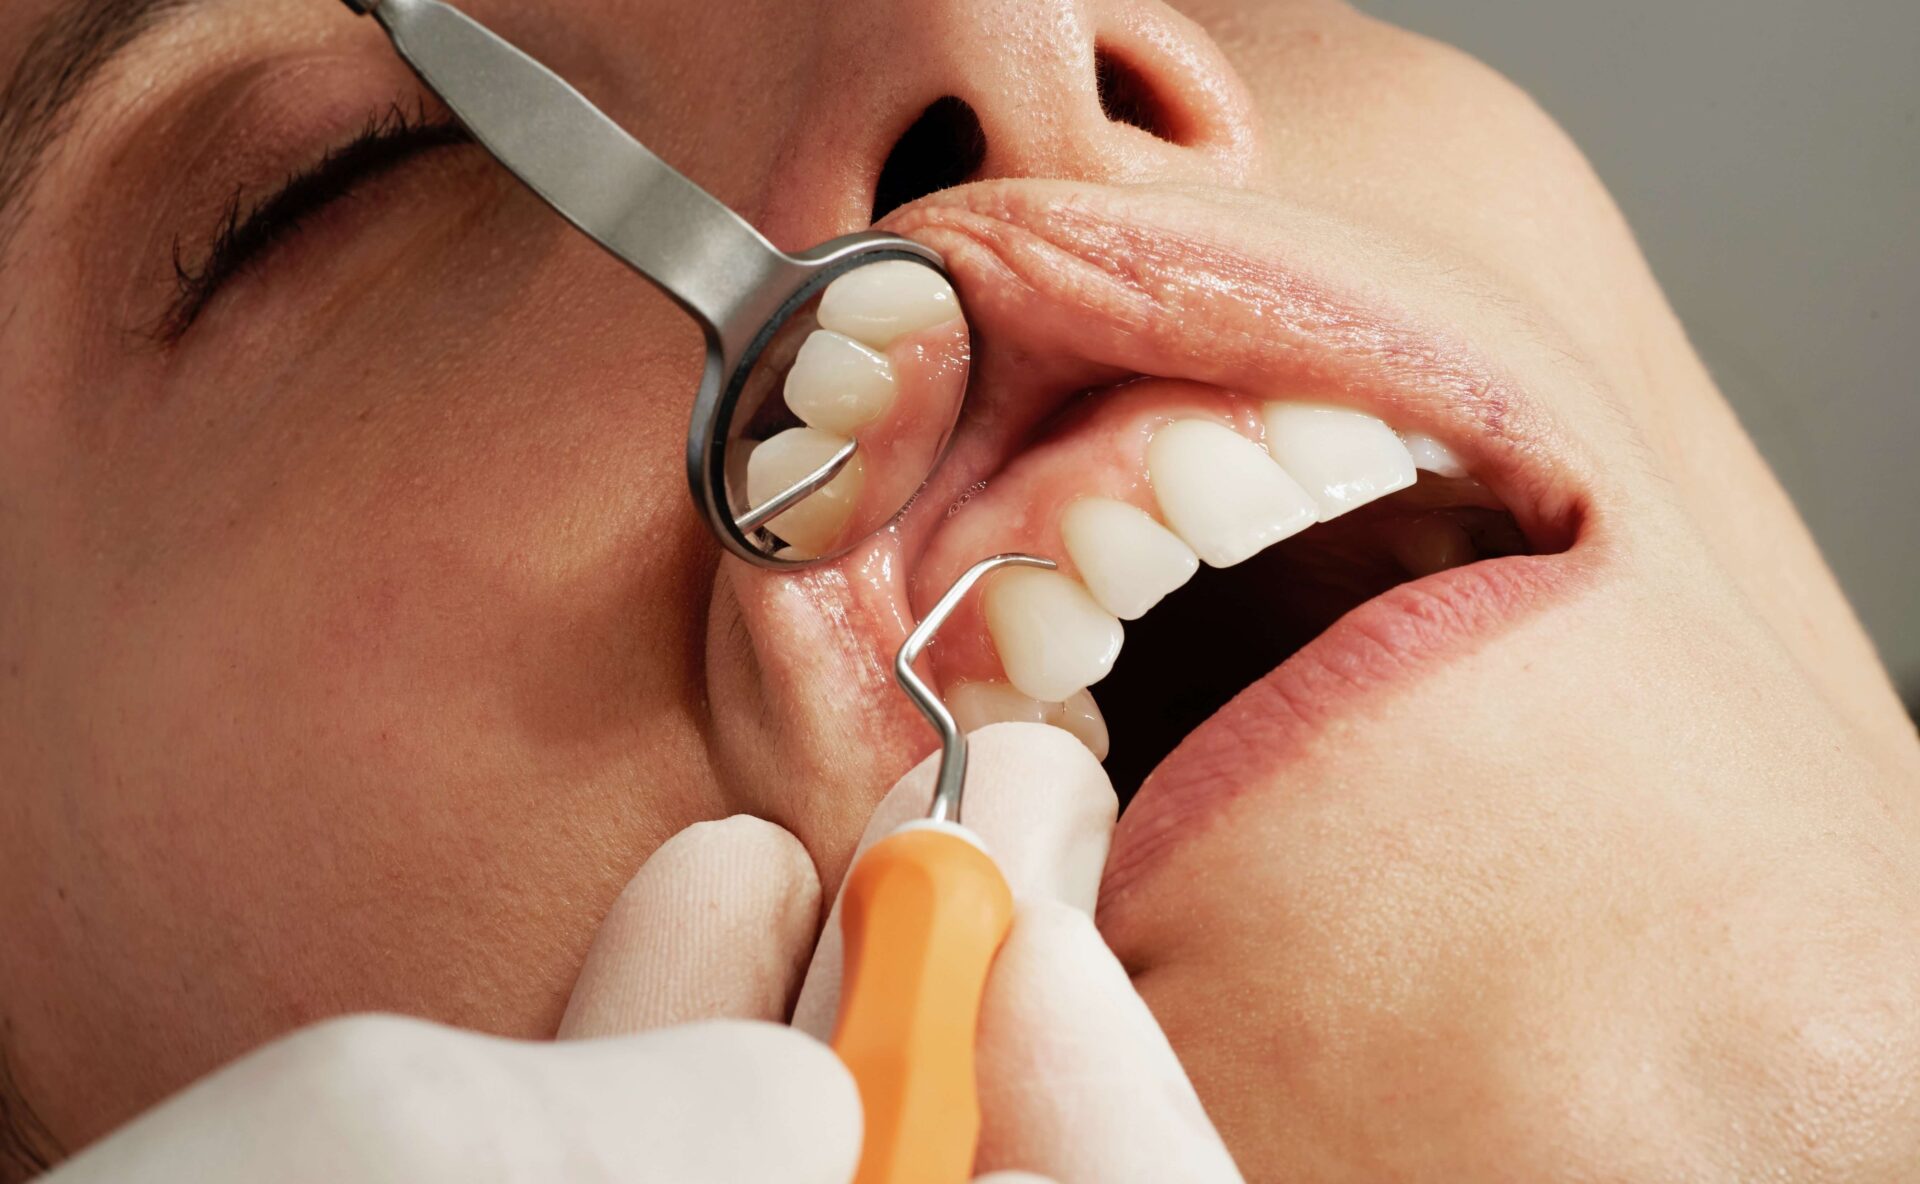 Dental Patient Having Their First Dental Checkup